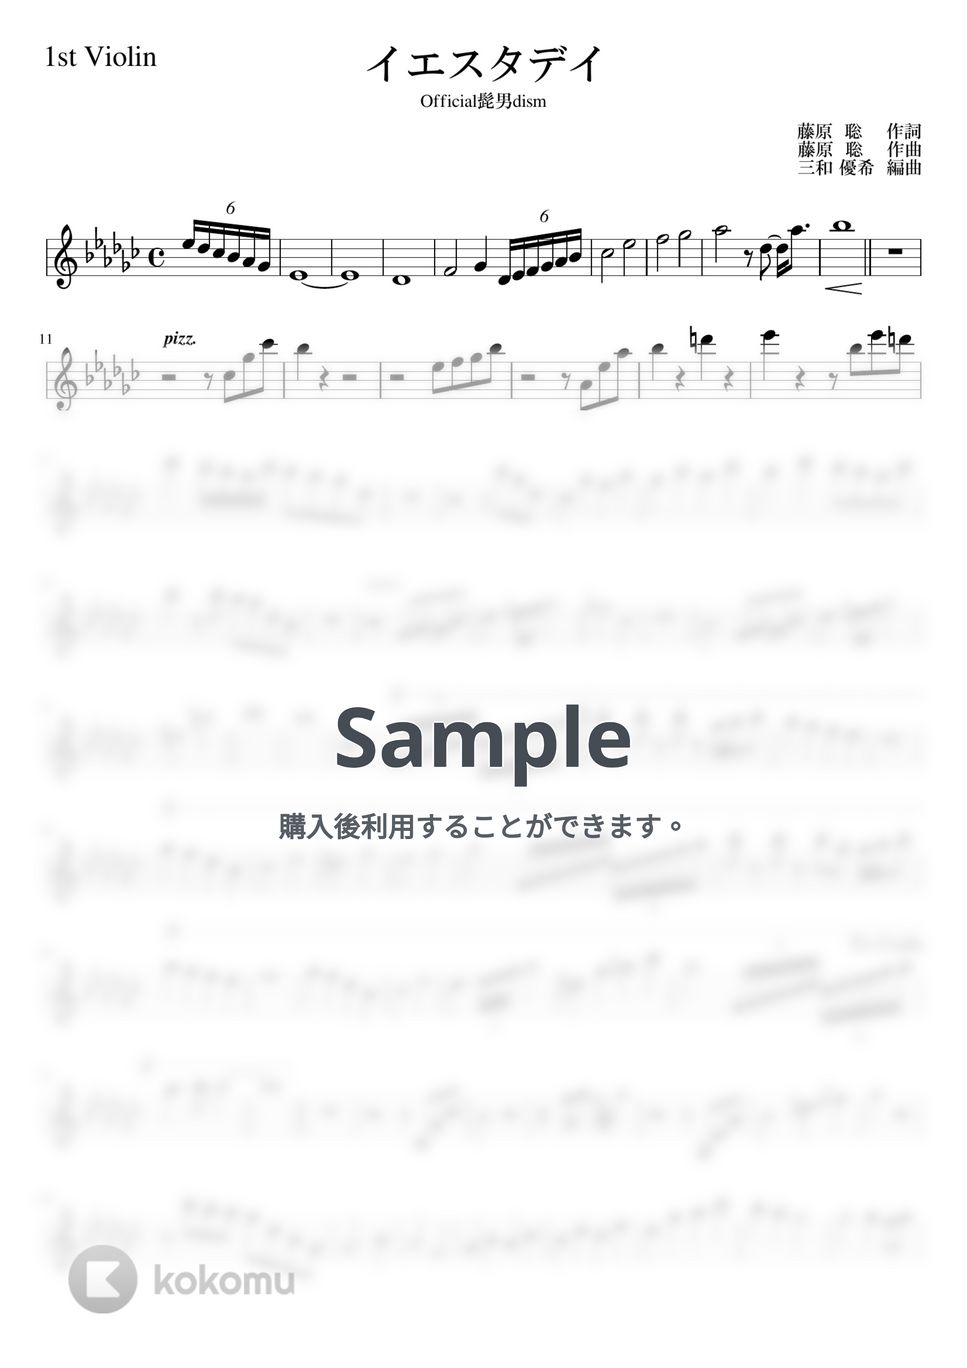 Official髭男dism - イエスタデイ (Violin Ⅰ) by 三和優希